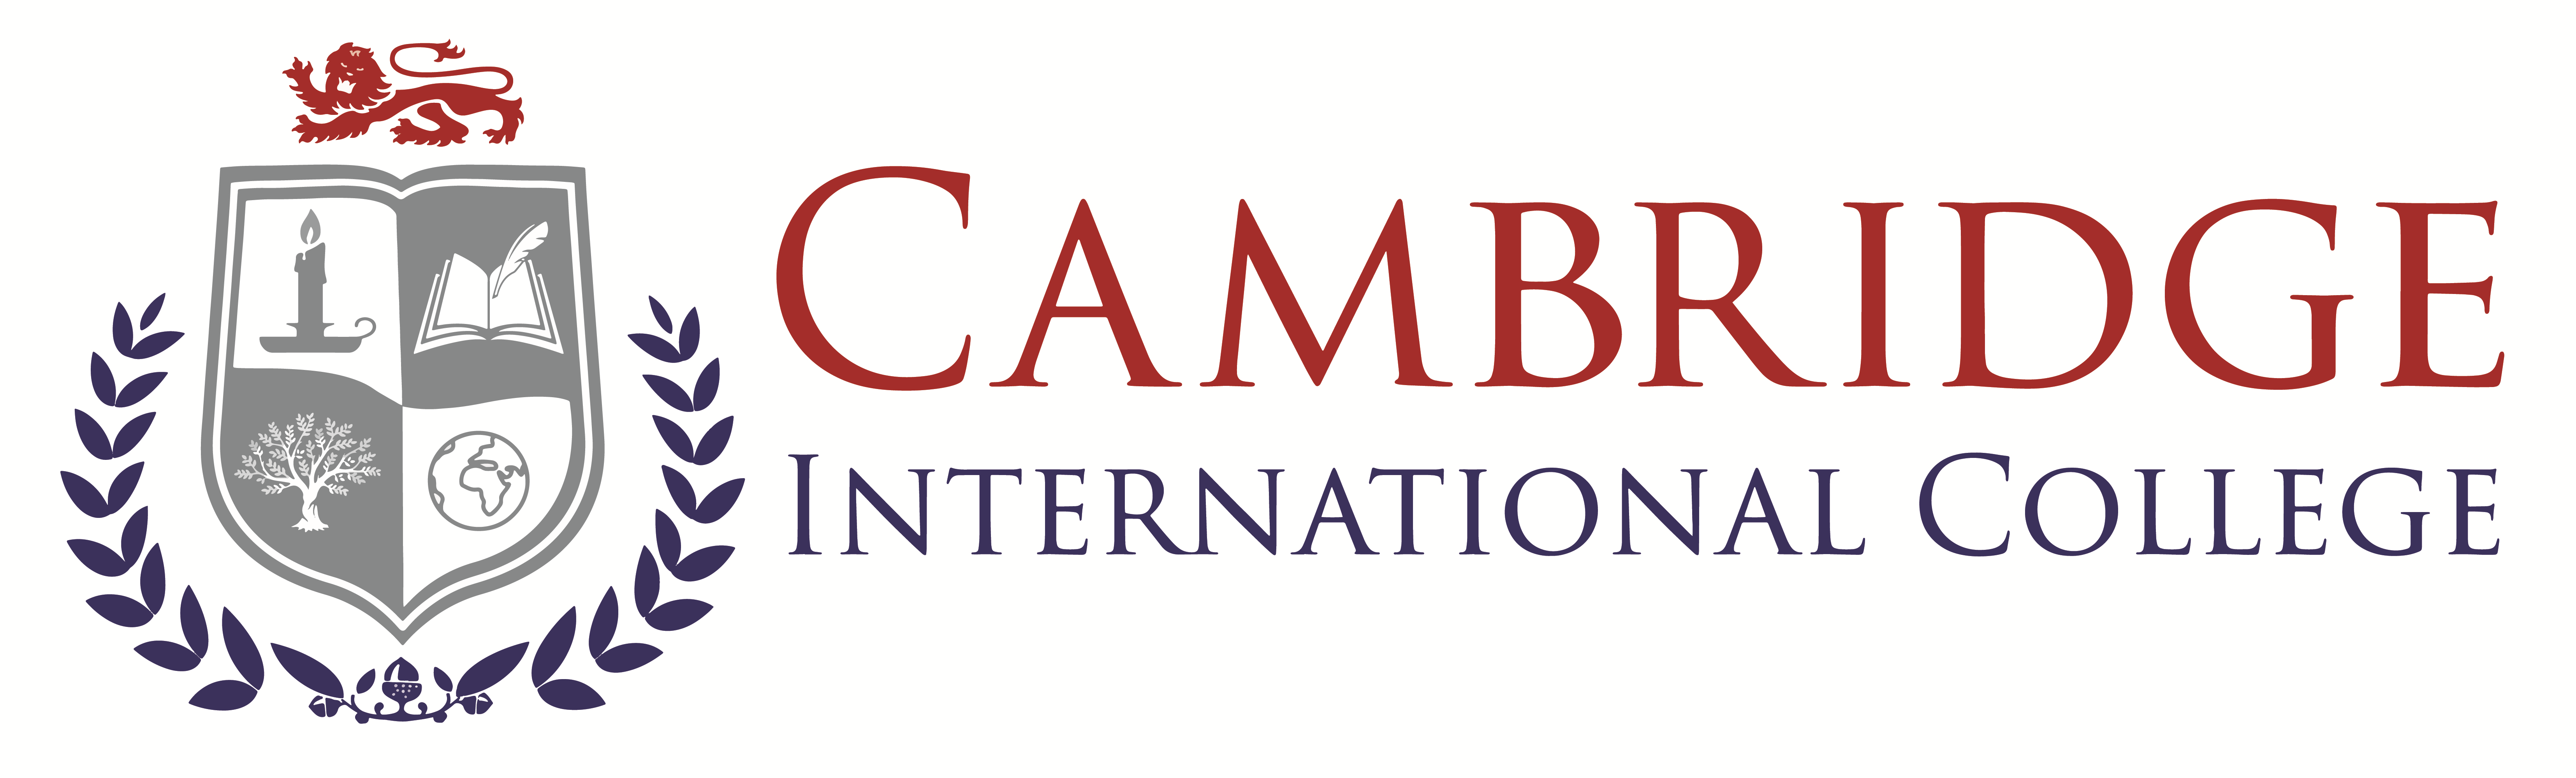 Cambridge International College - UK